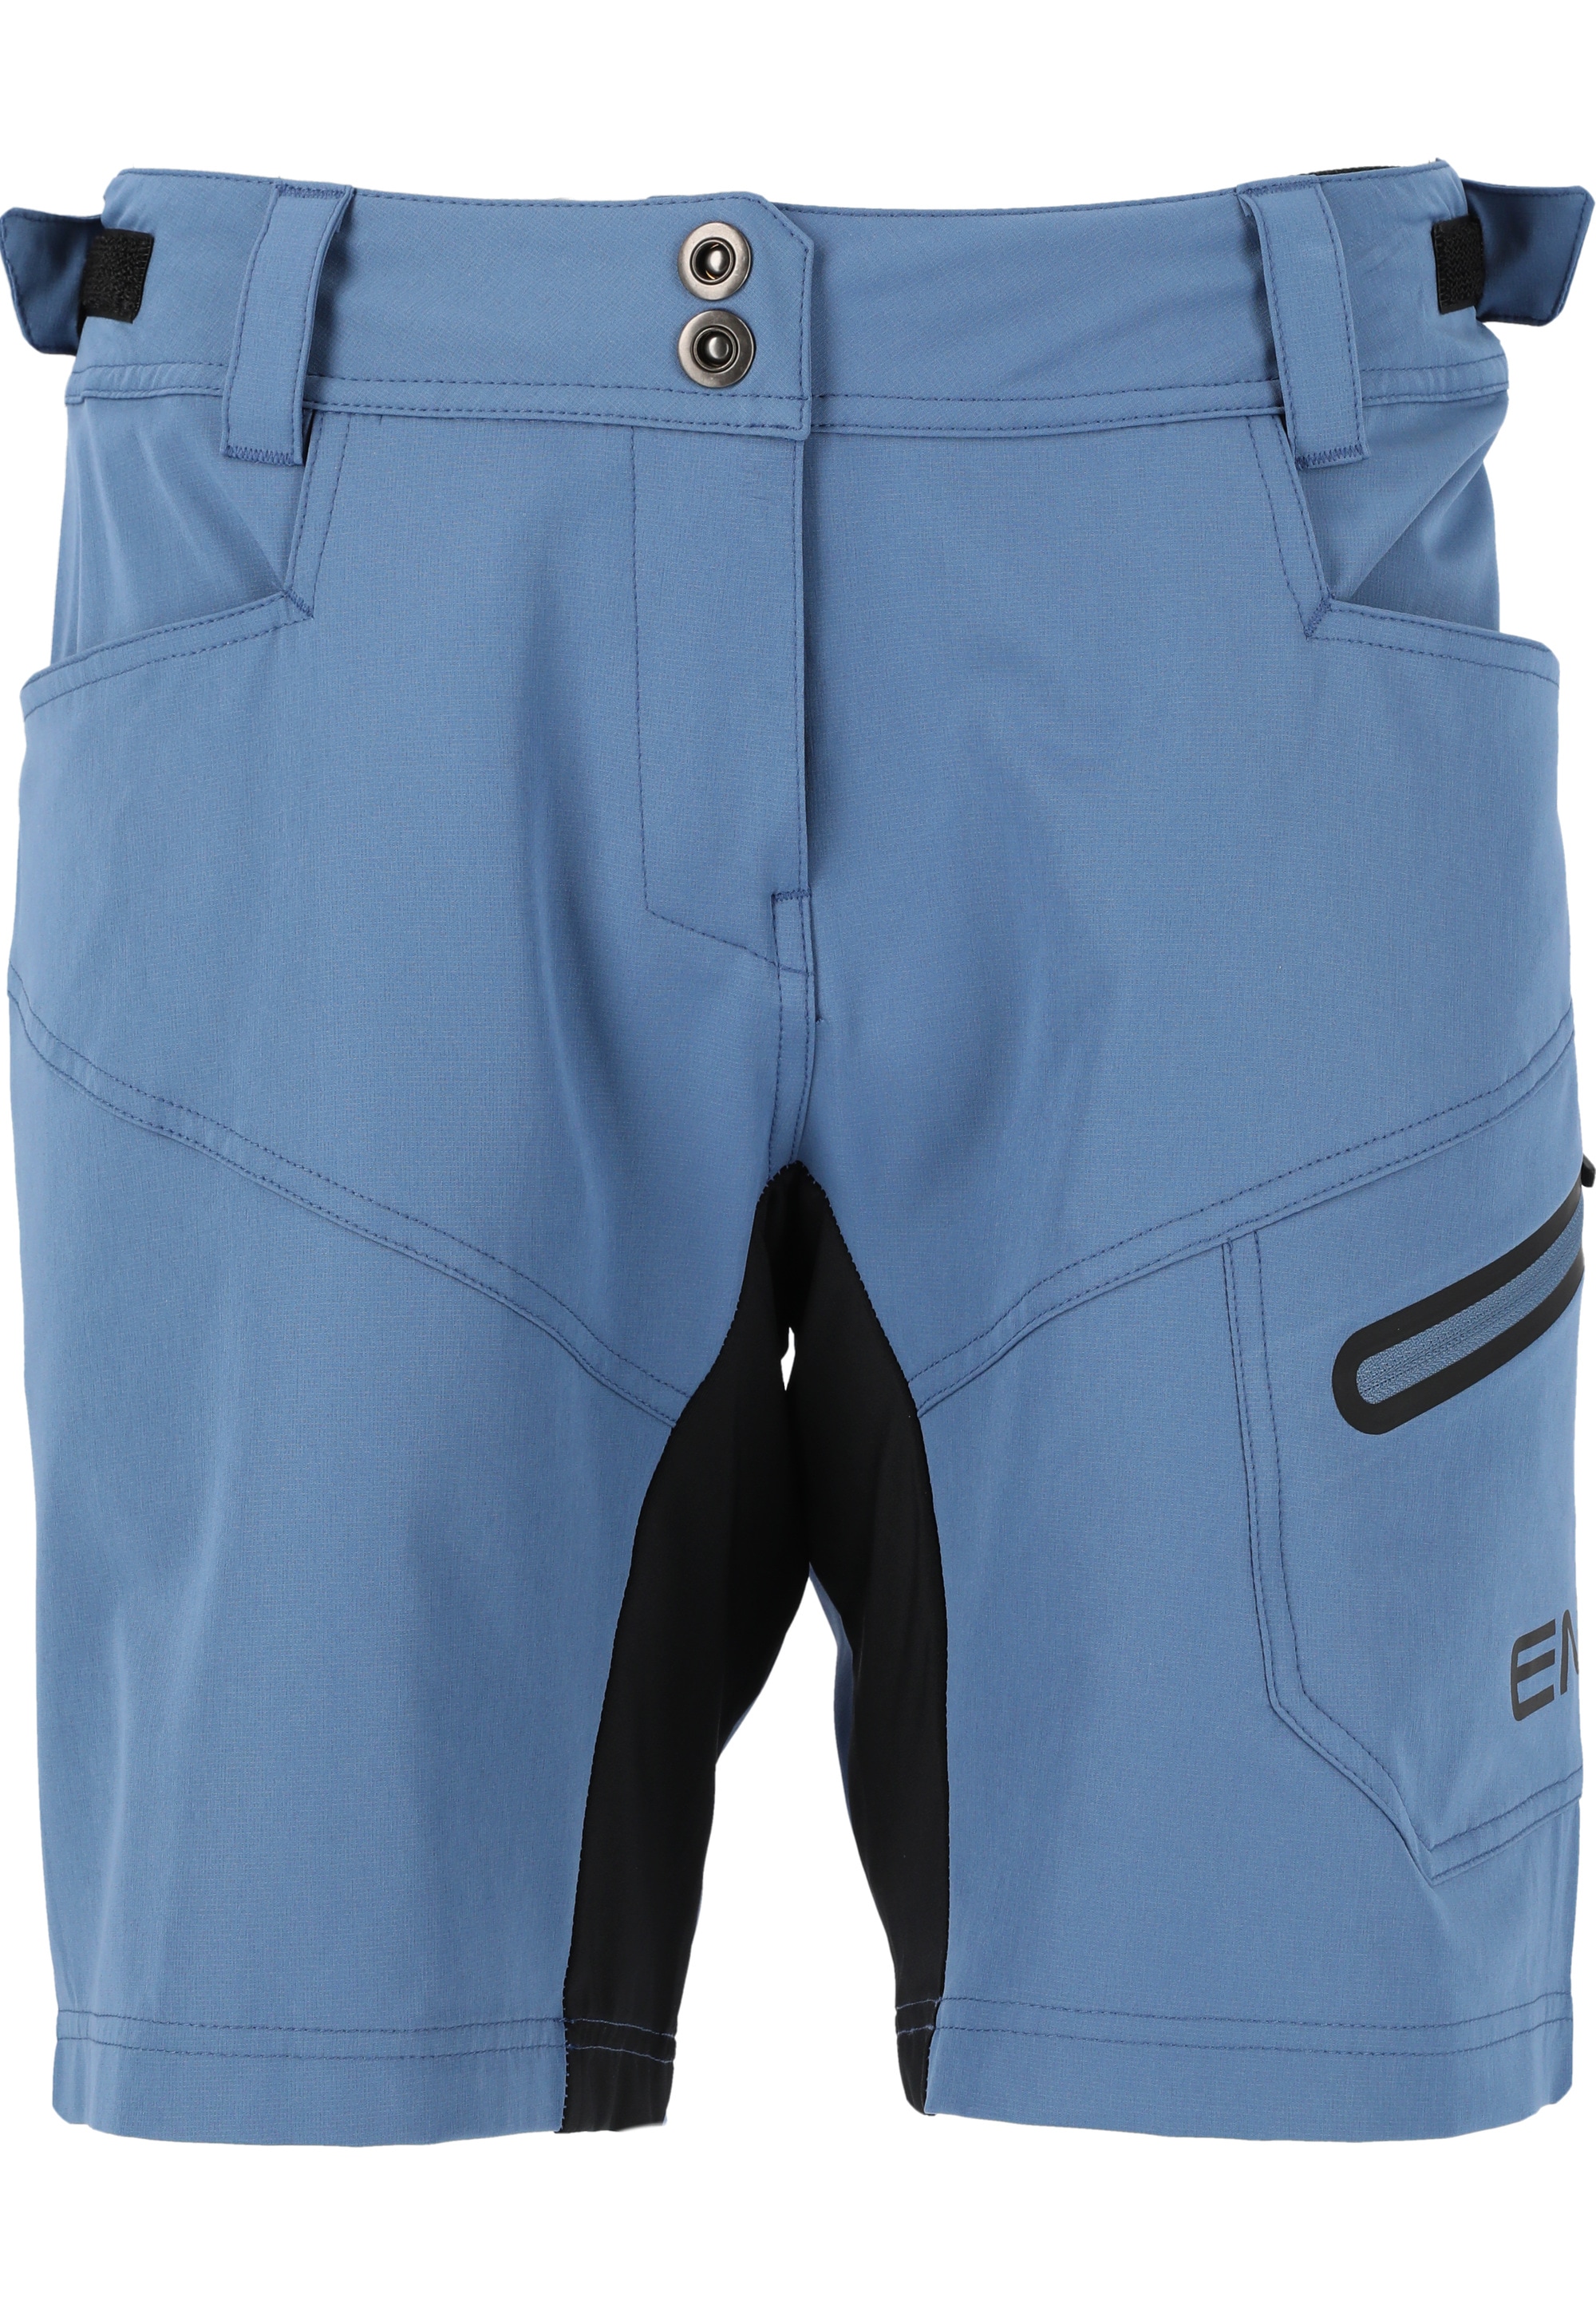 ENDURANCE Radhose »Jamilla W 2 1 shoppen in herausnehmbarer mit Innen-Tights Shorts«